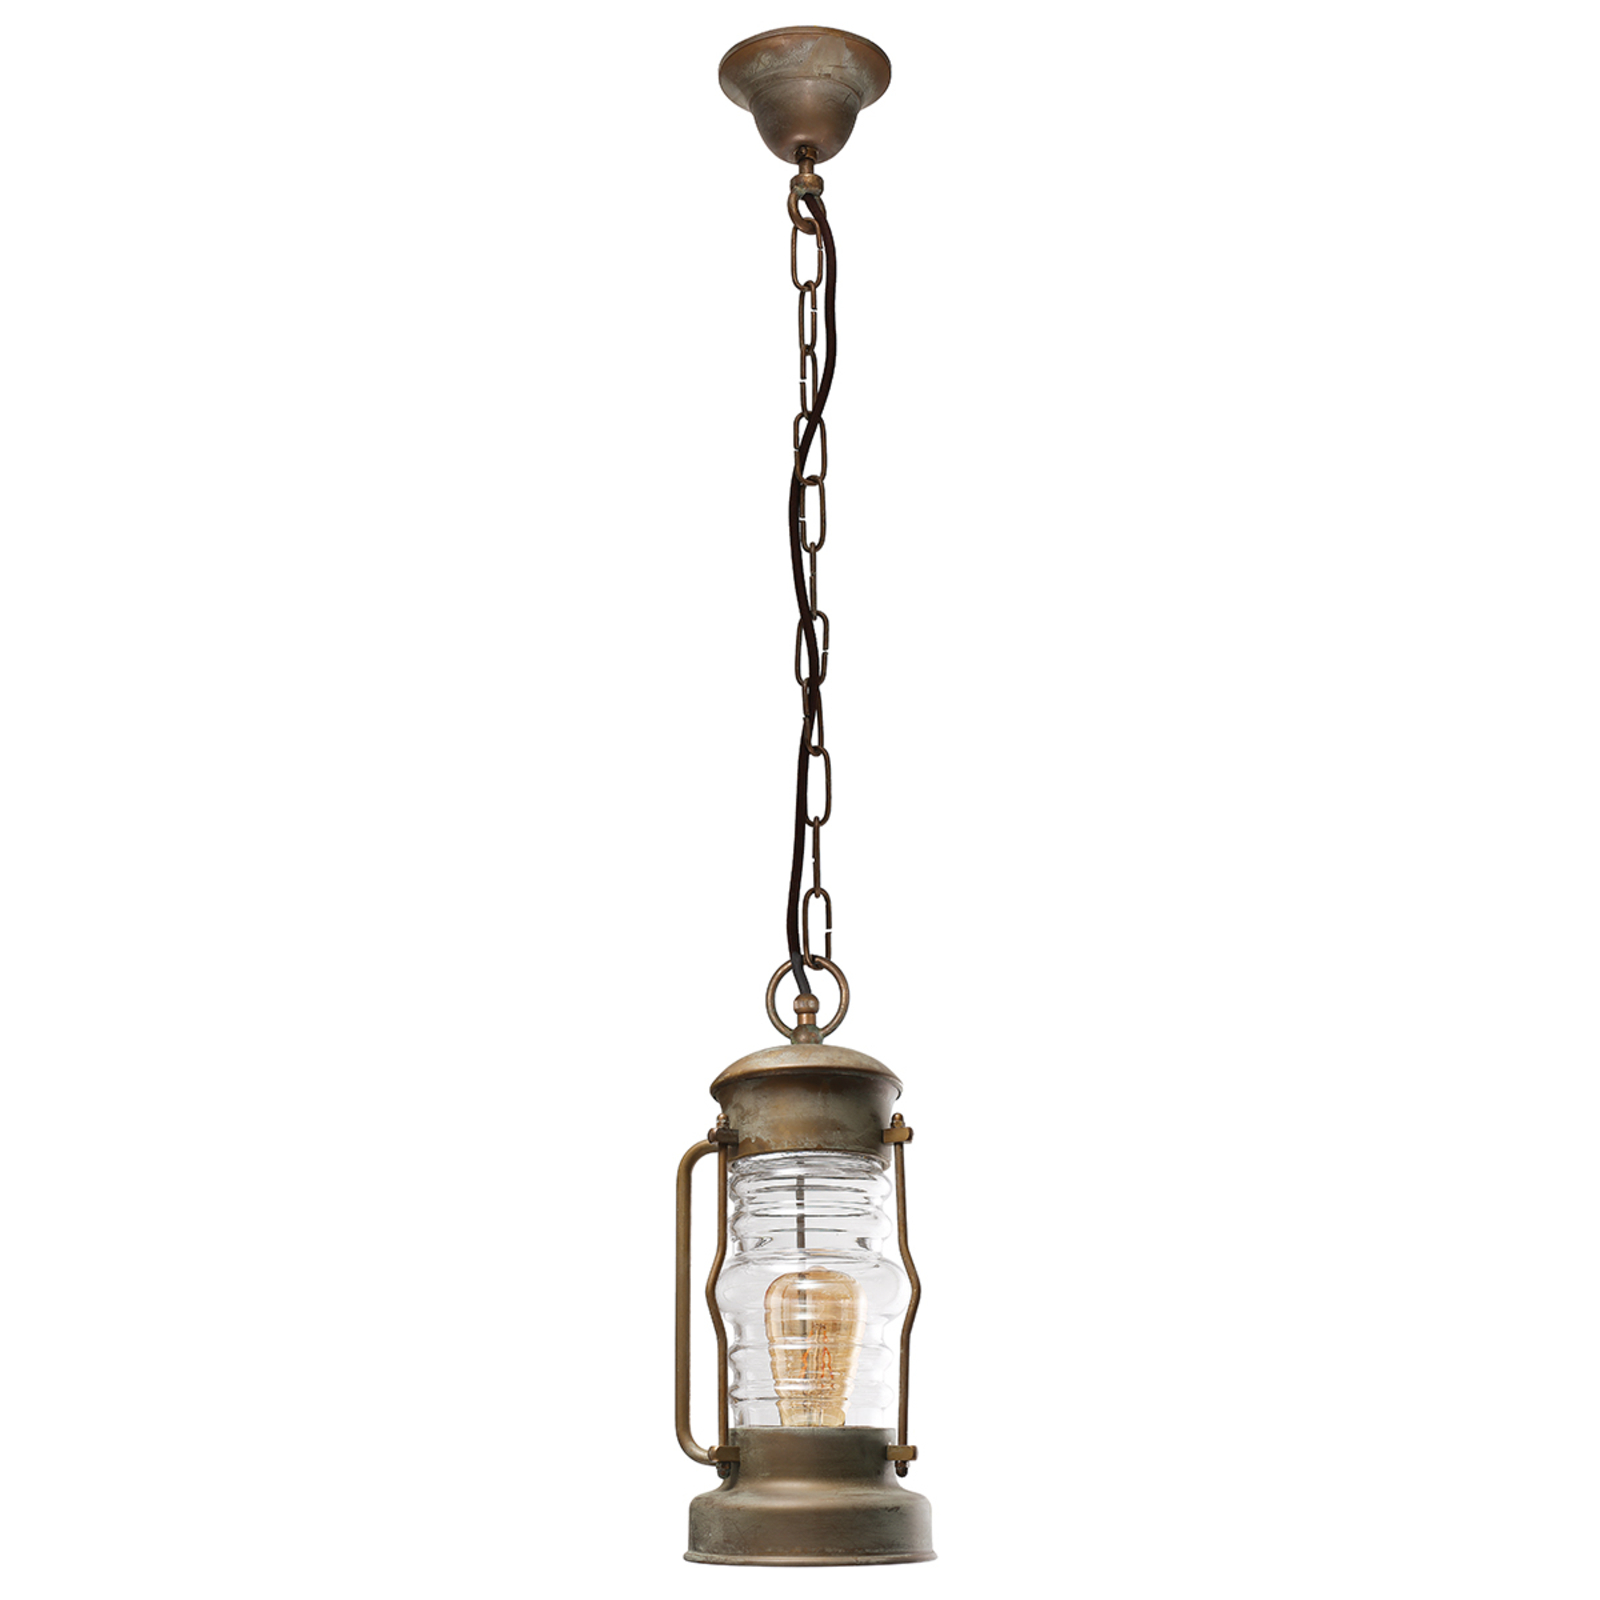 Antiko pendant light in lantern shape, seawater resistant